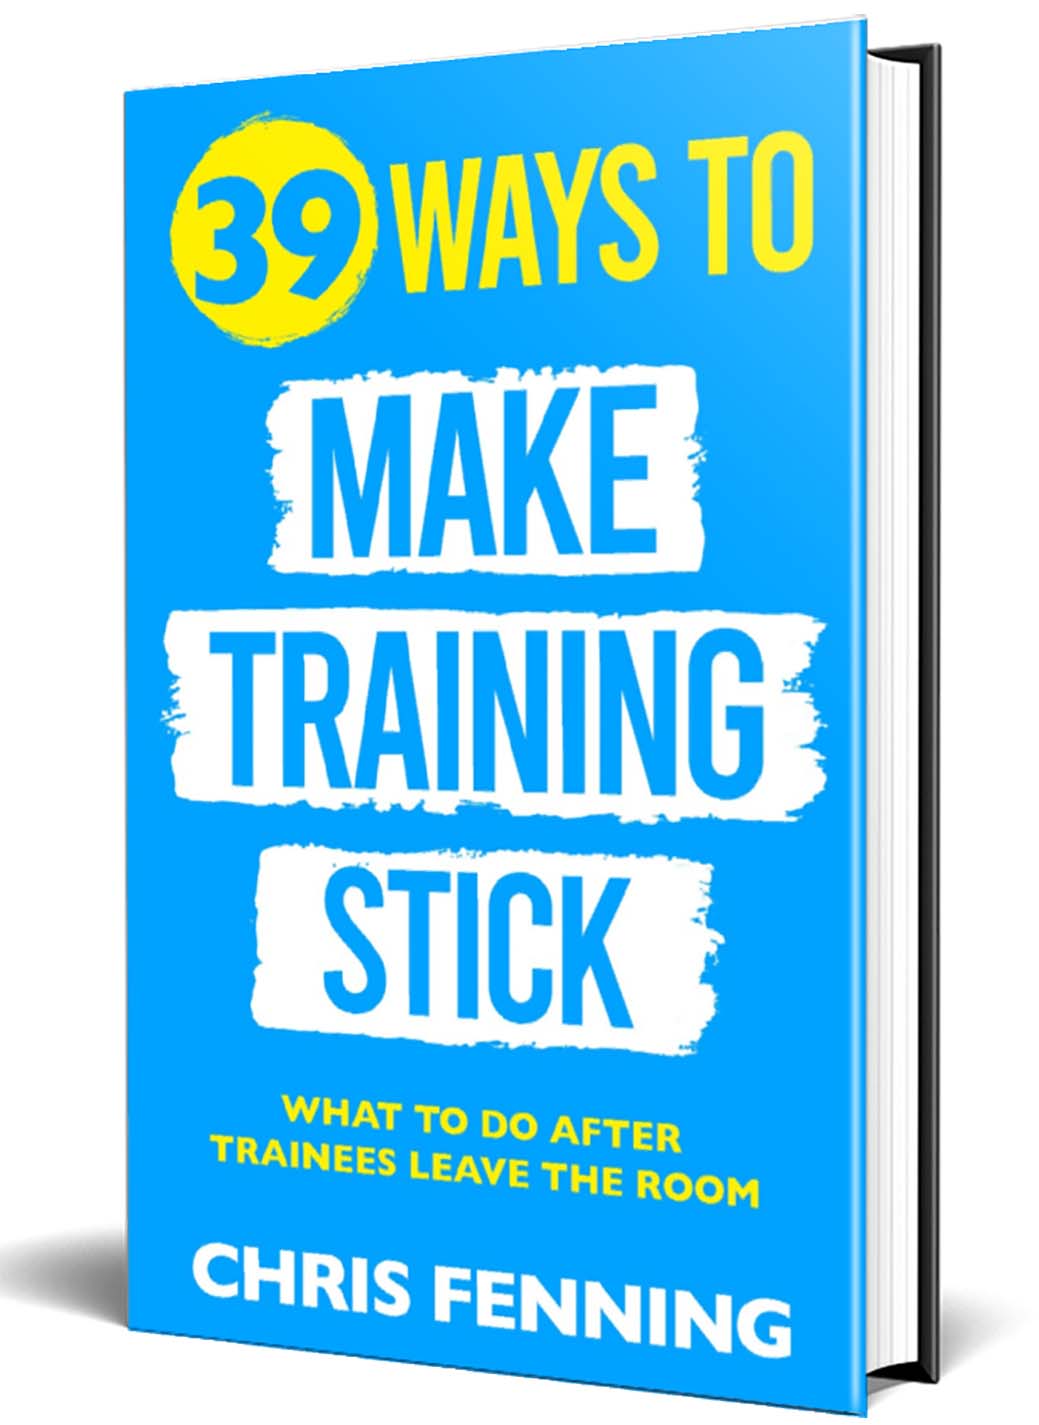 39 Ways to Make Training Stick by Chris Fenning